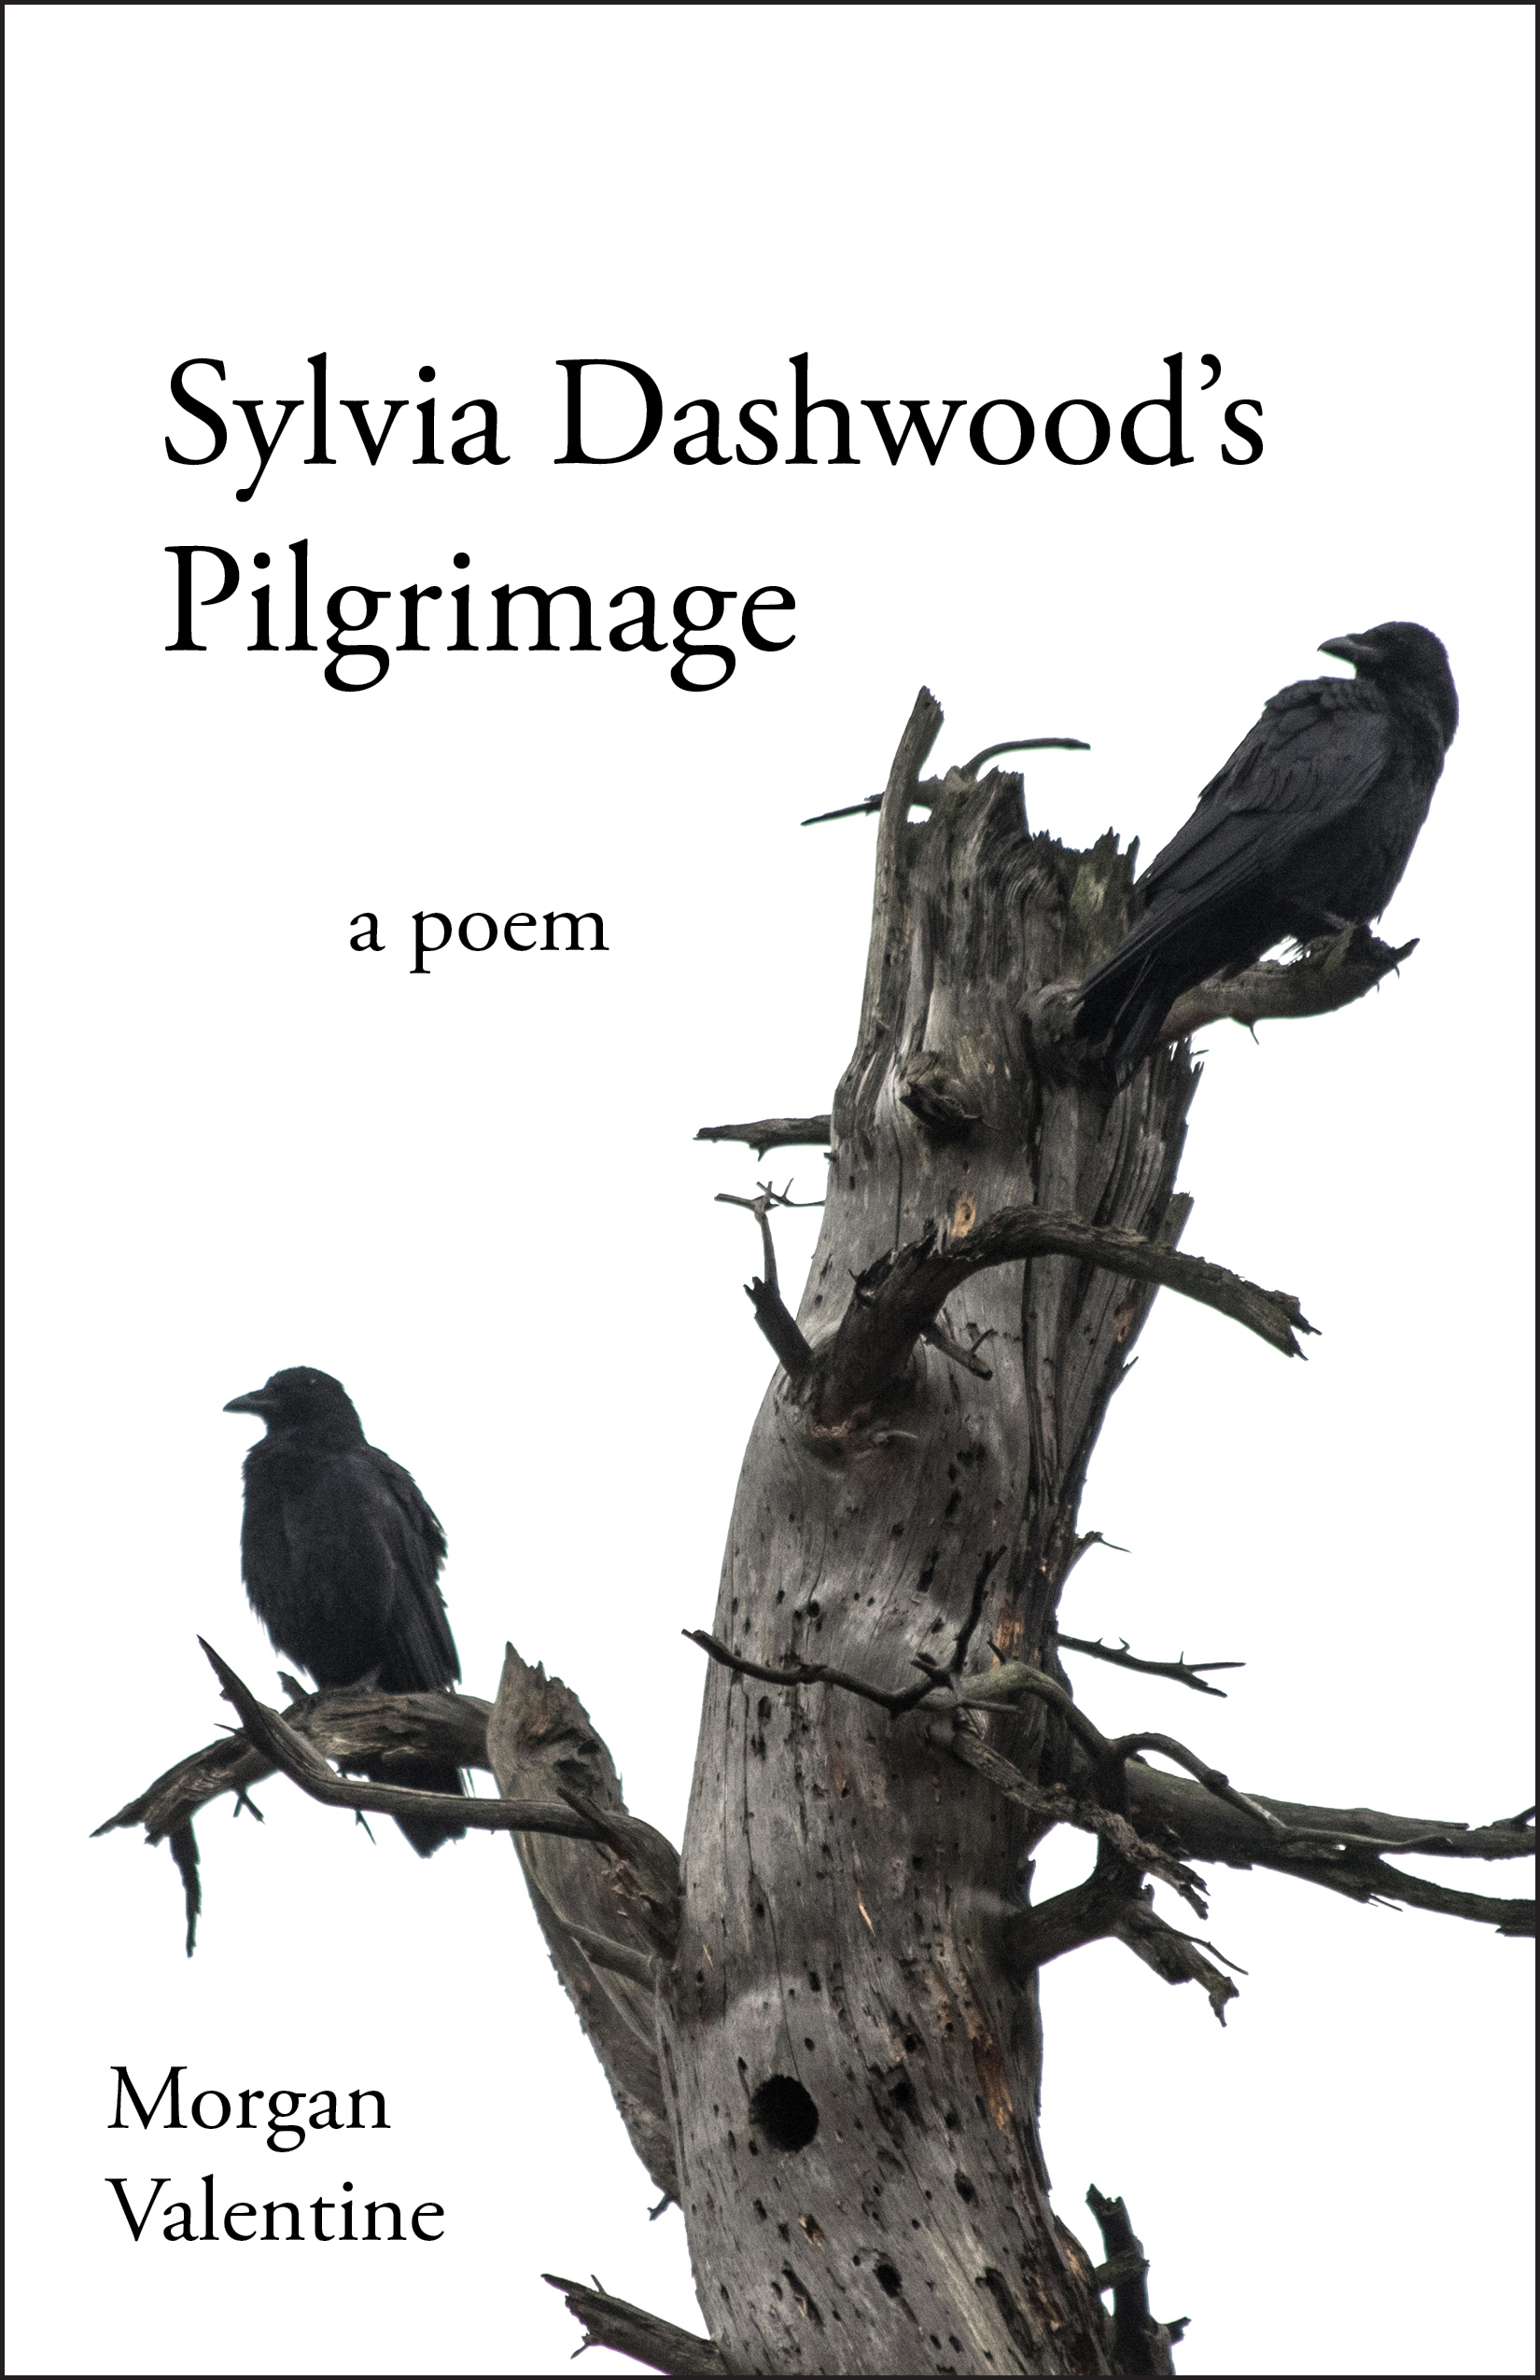 Sylvia Dashwood's Pilgrimage by Morgan Valentine